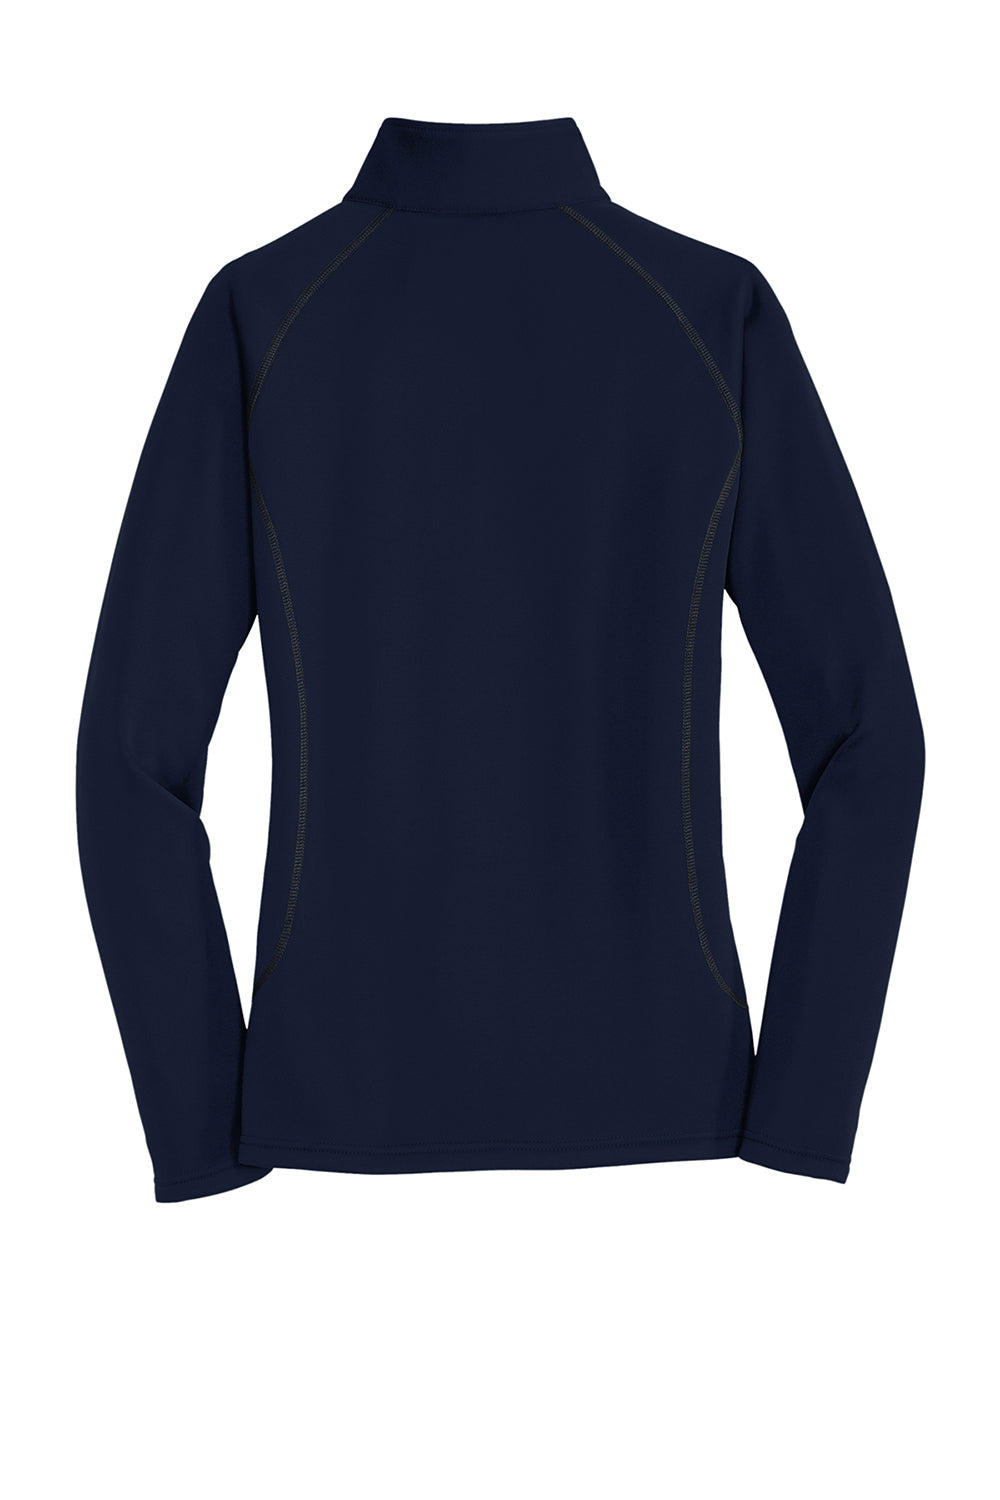 Eddie Bauer EB237 Womens Smooth Fleece 1/4 Zip Sweatshirt River Navy Blue Flat Back